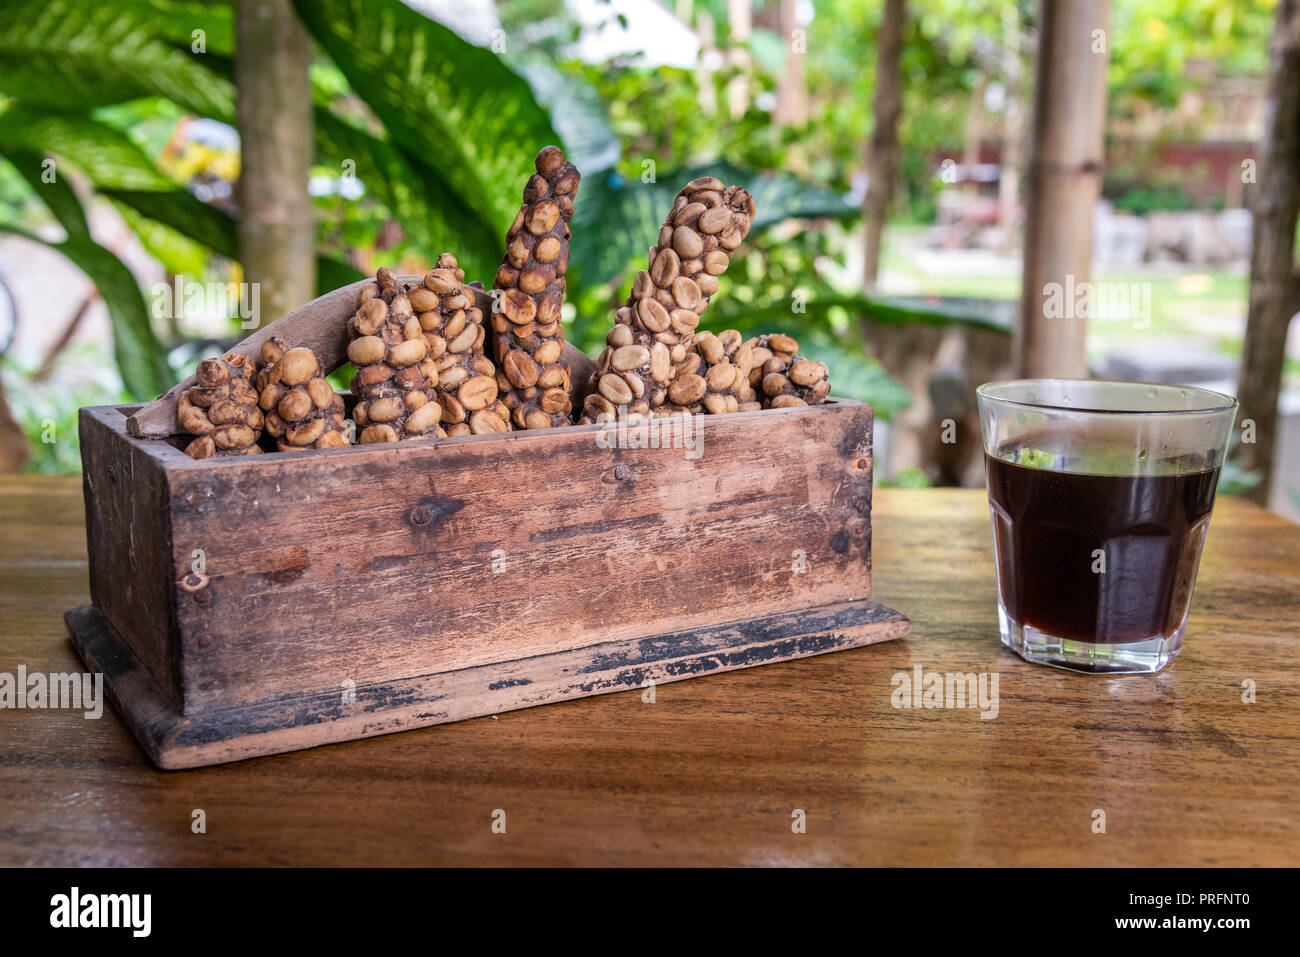 Bicchiere di Kofi Luwak caffè accanto a una scatola di legno con alcune ciliegie di caffè defecato da palm civets in una azienda di caffè di Ijen Plateau, Java, Indonesia Foto Stock